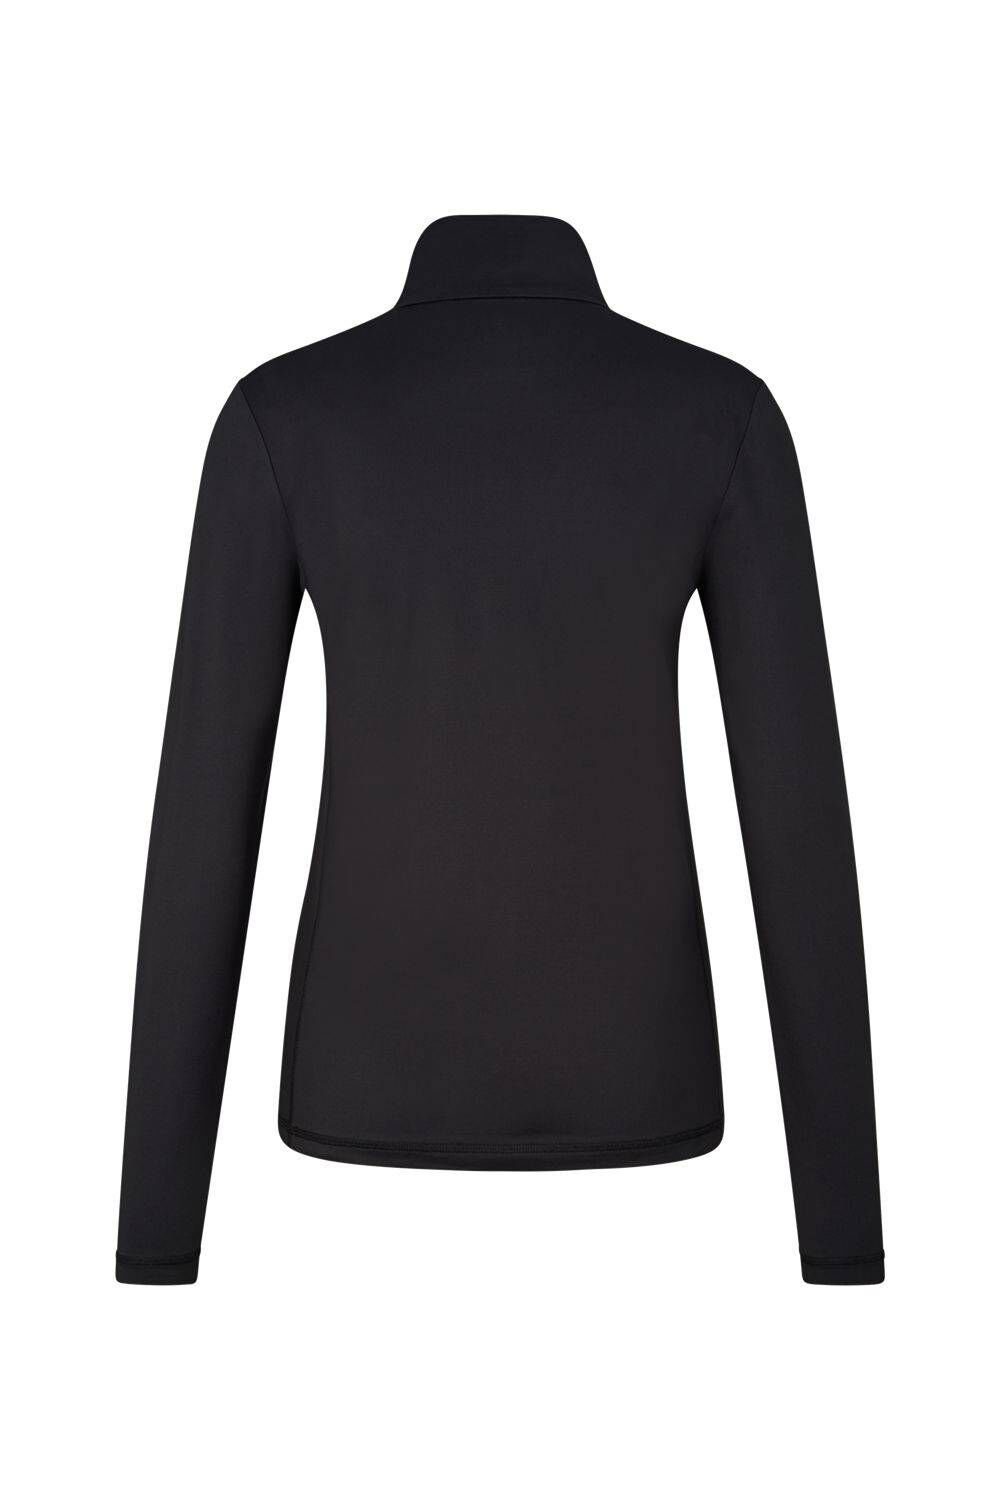 Bogner Fire + (200) schwarz Sweatshirt Ice 2 MARGO Damen Trainingsjacke